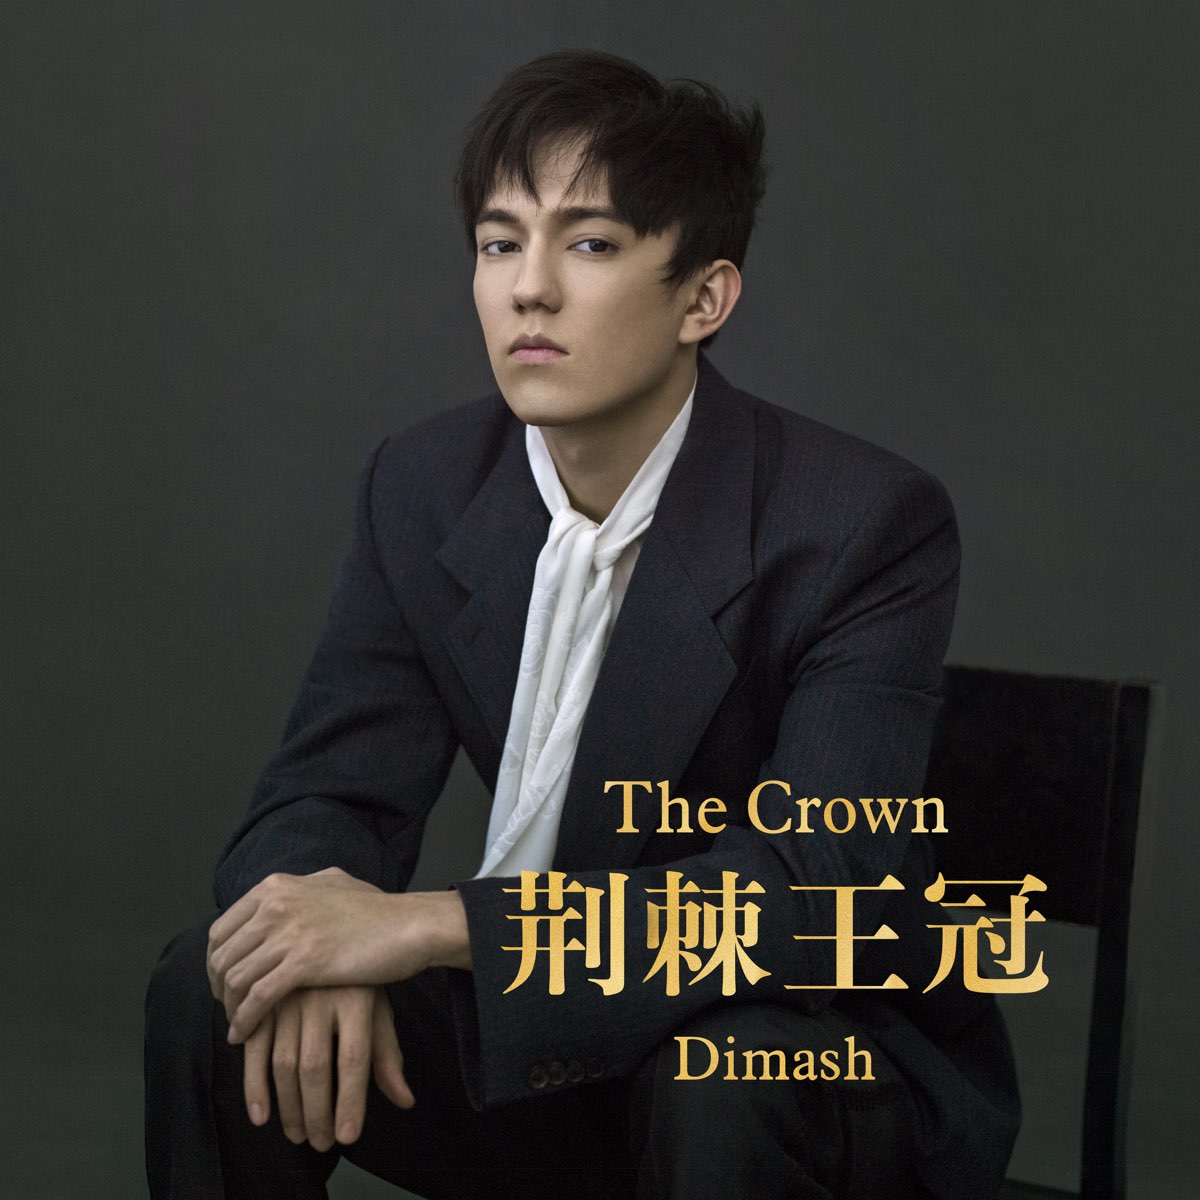 The Crown - Single - Album by Dimash Qudaibergen - Apple Music